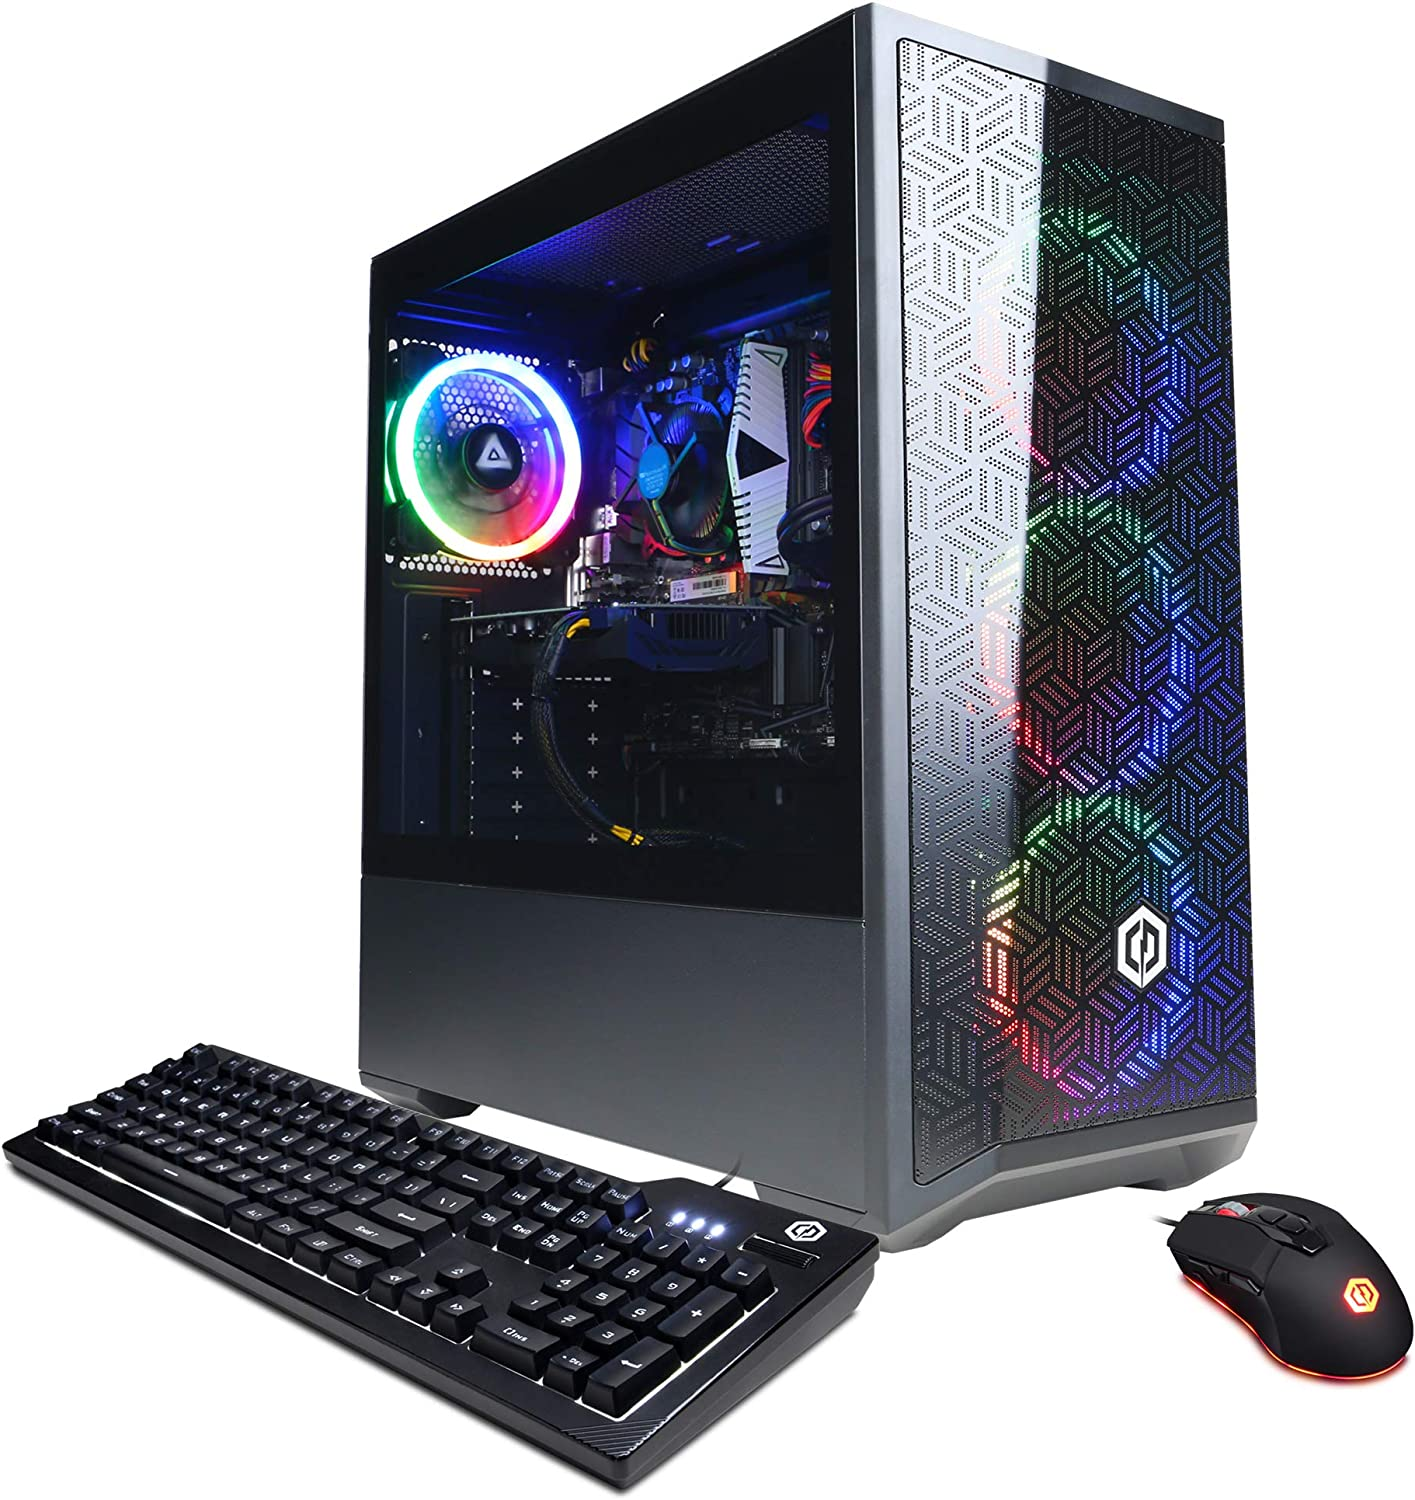 Amazon.com: CYBERPOWERPC Gamer Xtreme VR Gaming PC, Intel Core i5-11400F 2.6GHz, GeForce RTX 3050 8GB, 8GB DDR4 $699.99